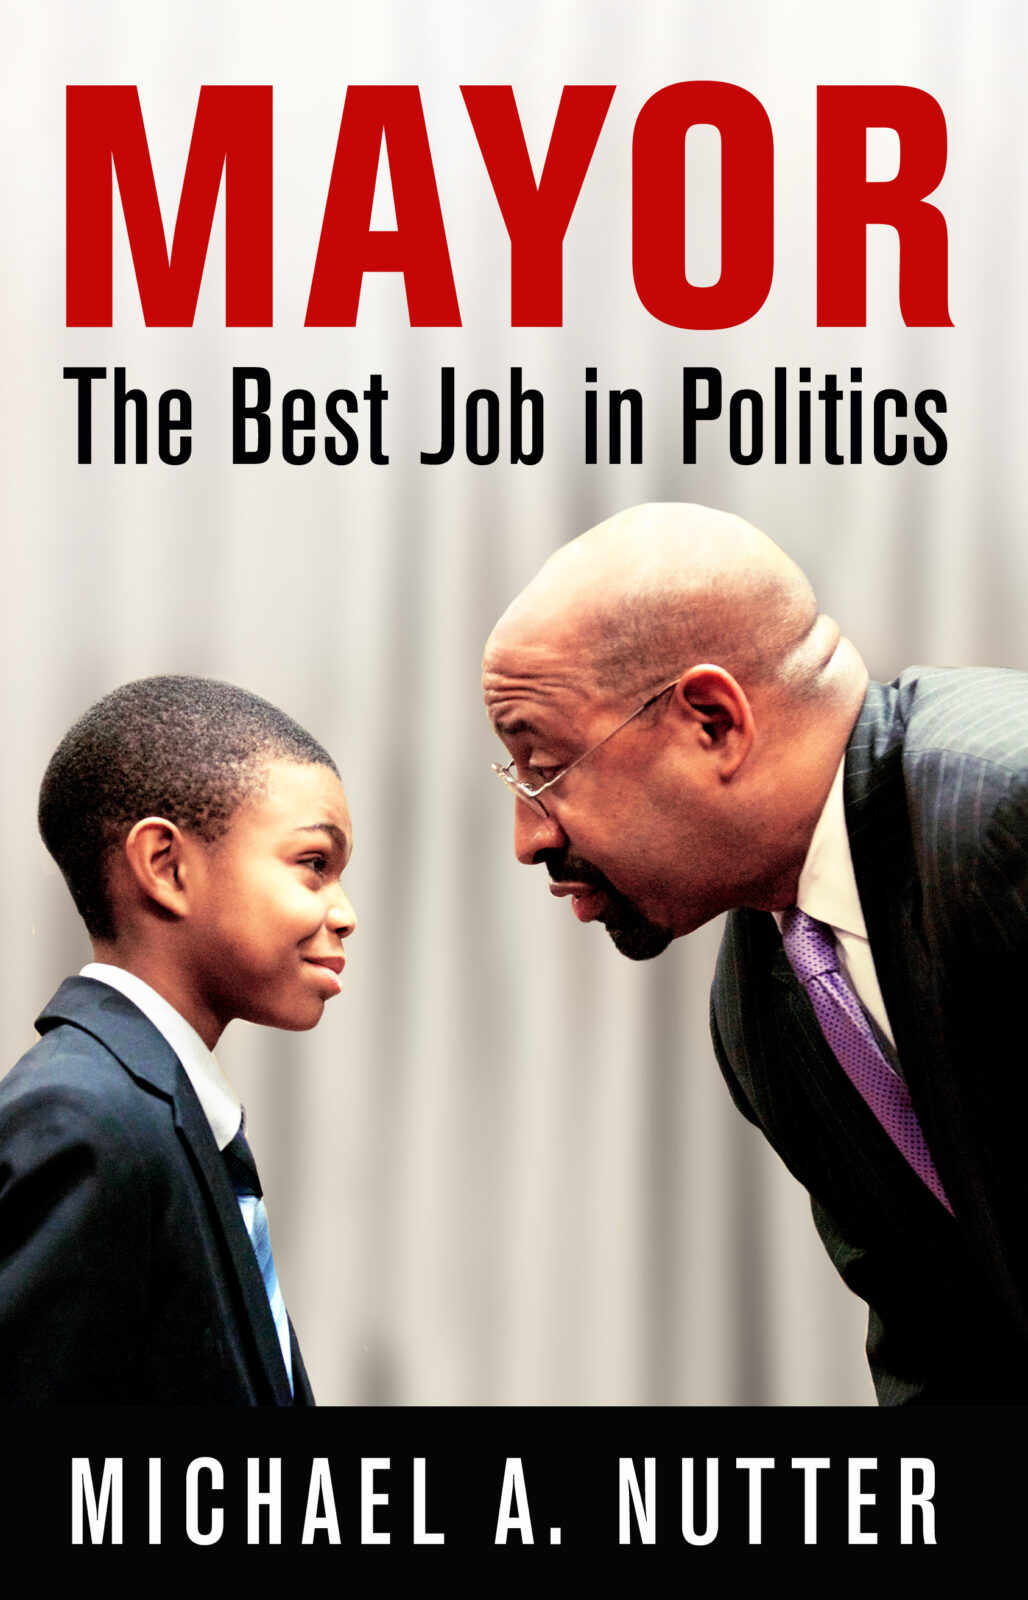 Book cover of "Mayor: The Best Job in Politics"